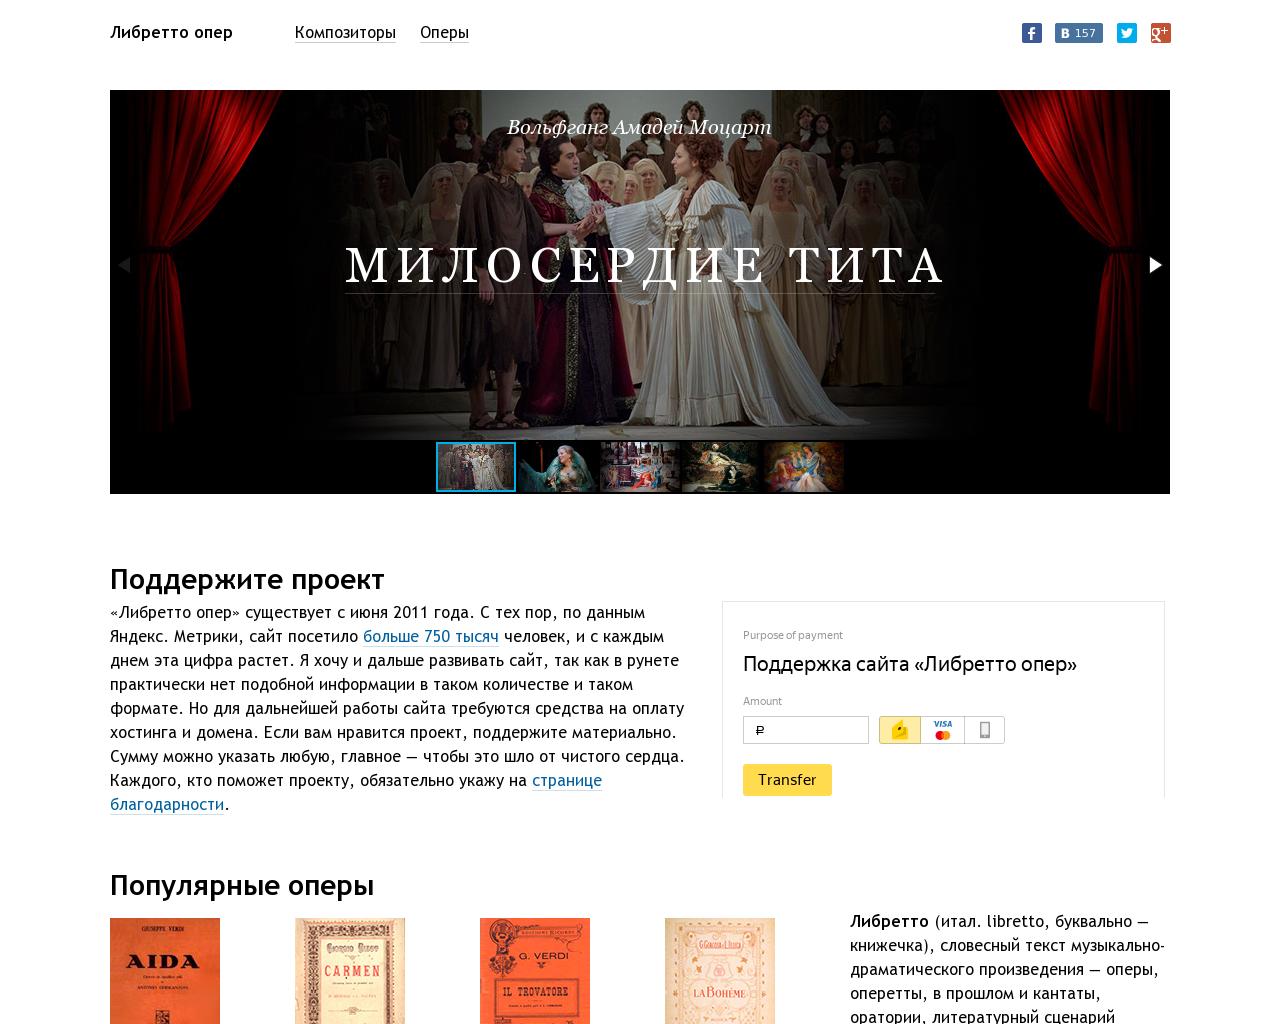 Изображение сайта libretto-oper.ru в разрешении 1280x1024